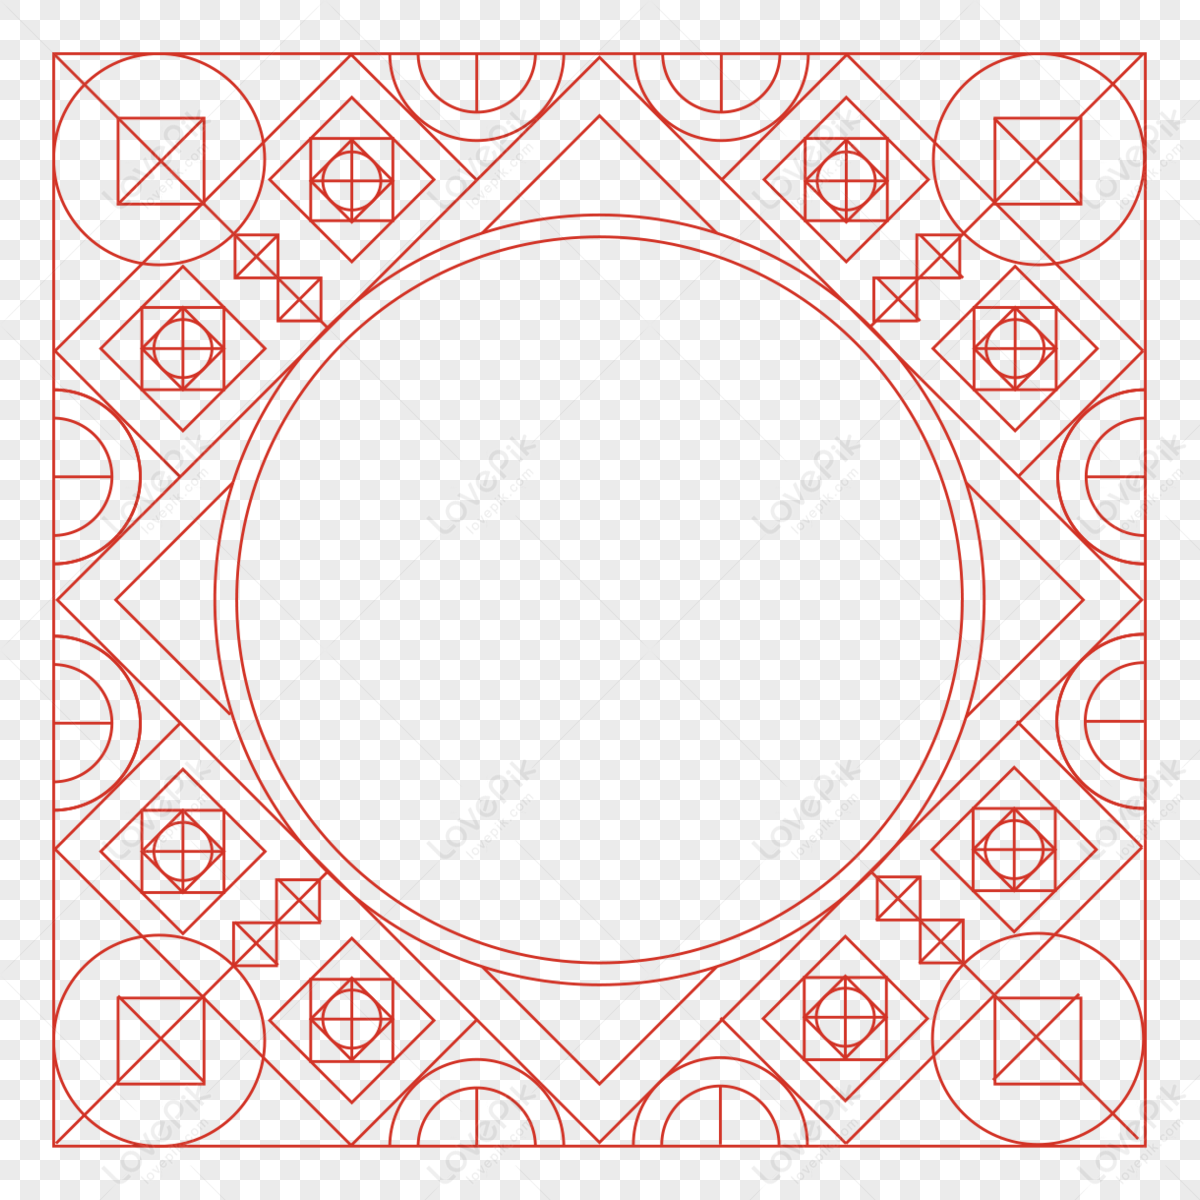 Template for carpet Royalty Free Vector Image - VectorStock | Islamic art  pattern, Pattern art, Persian art painting